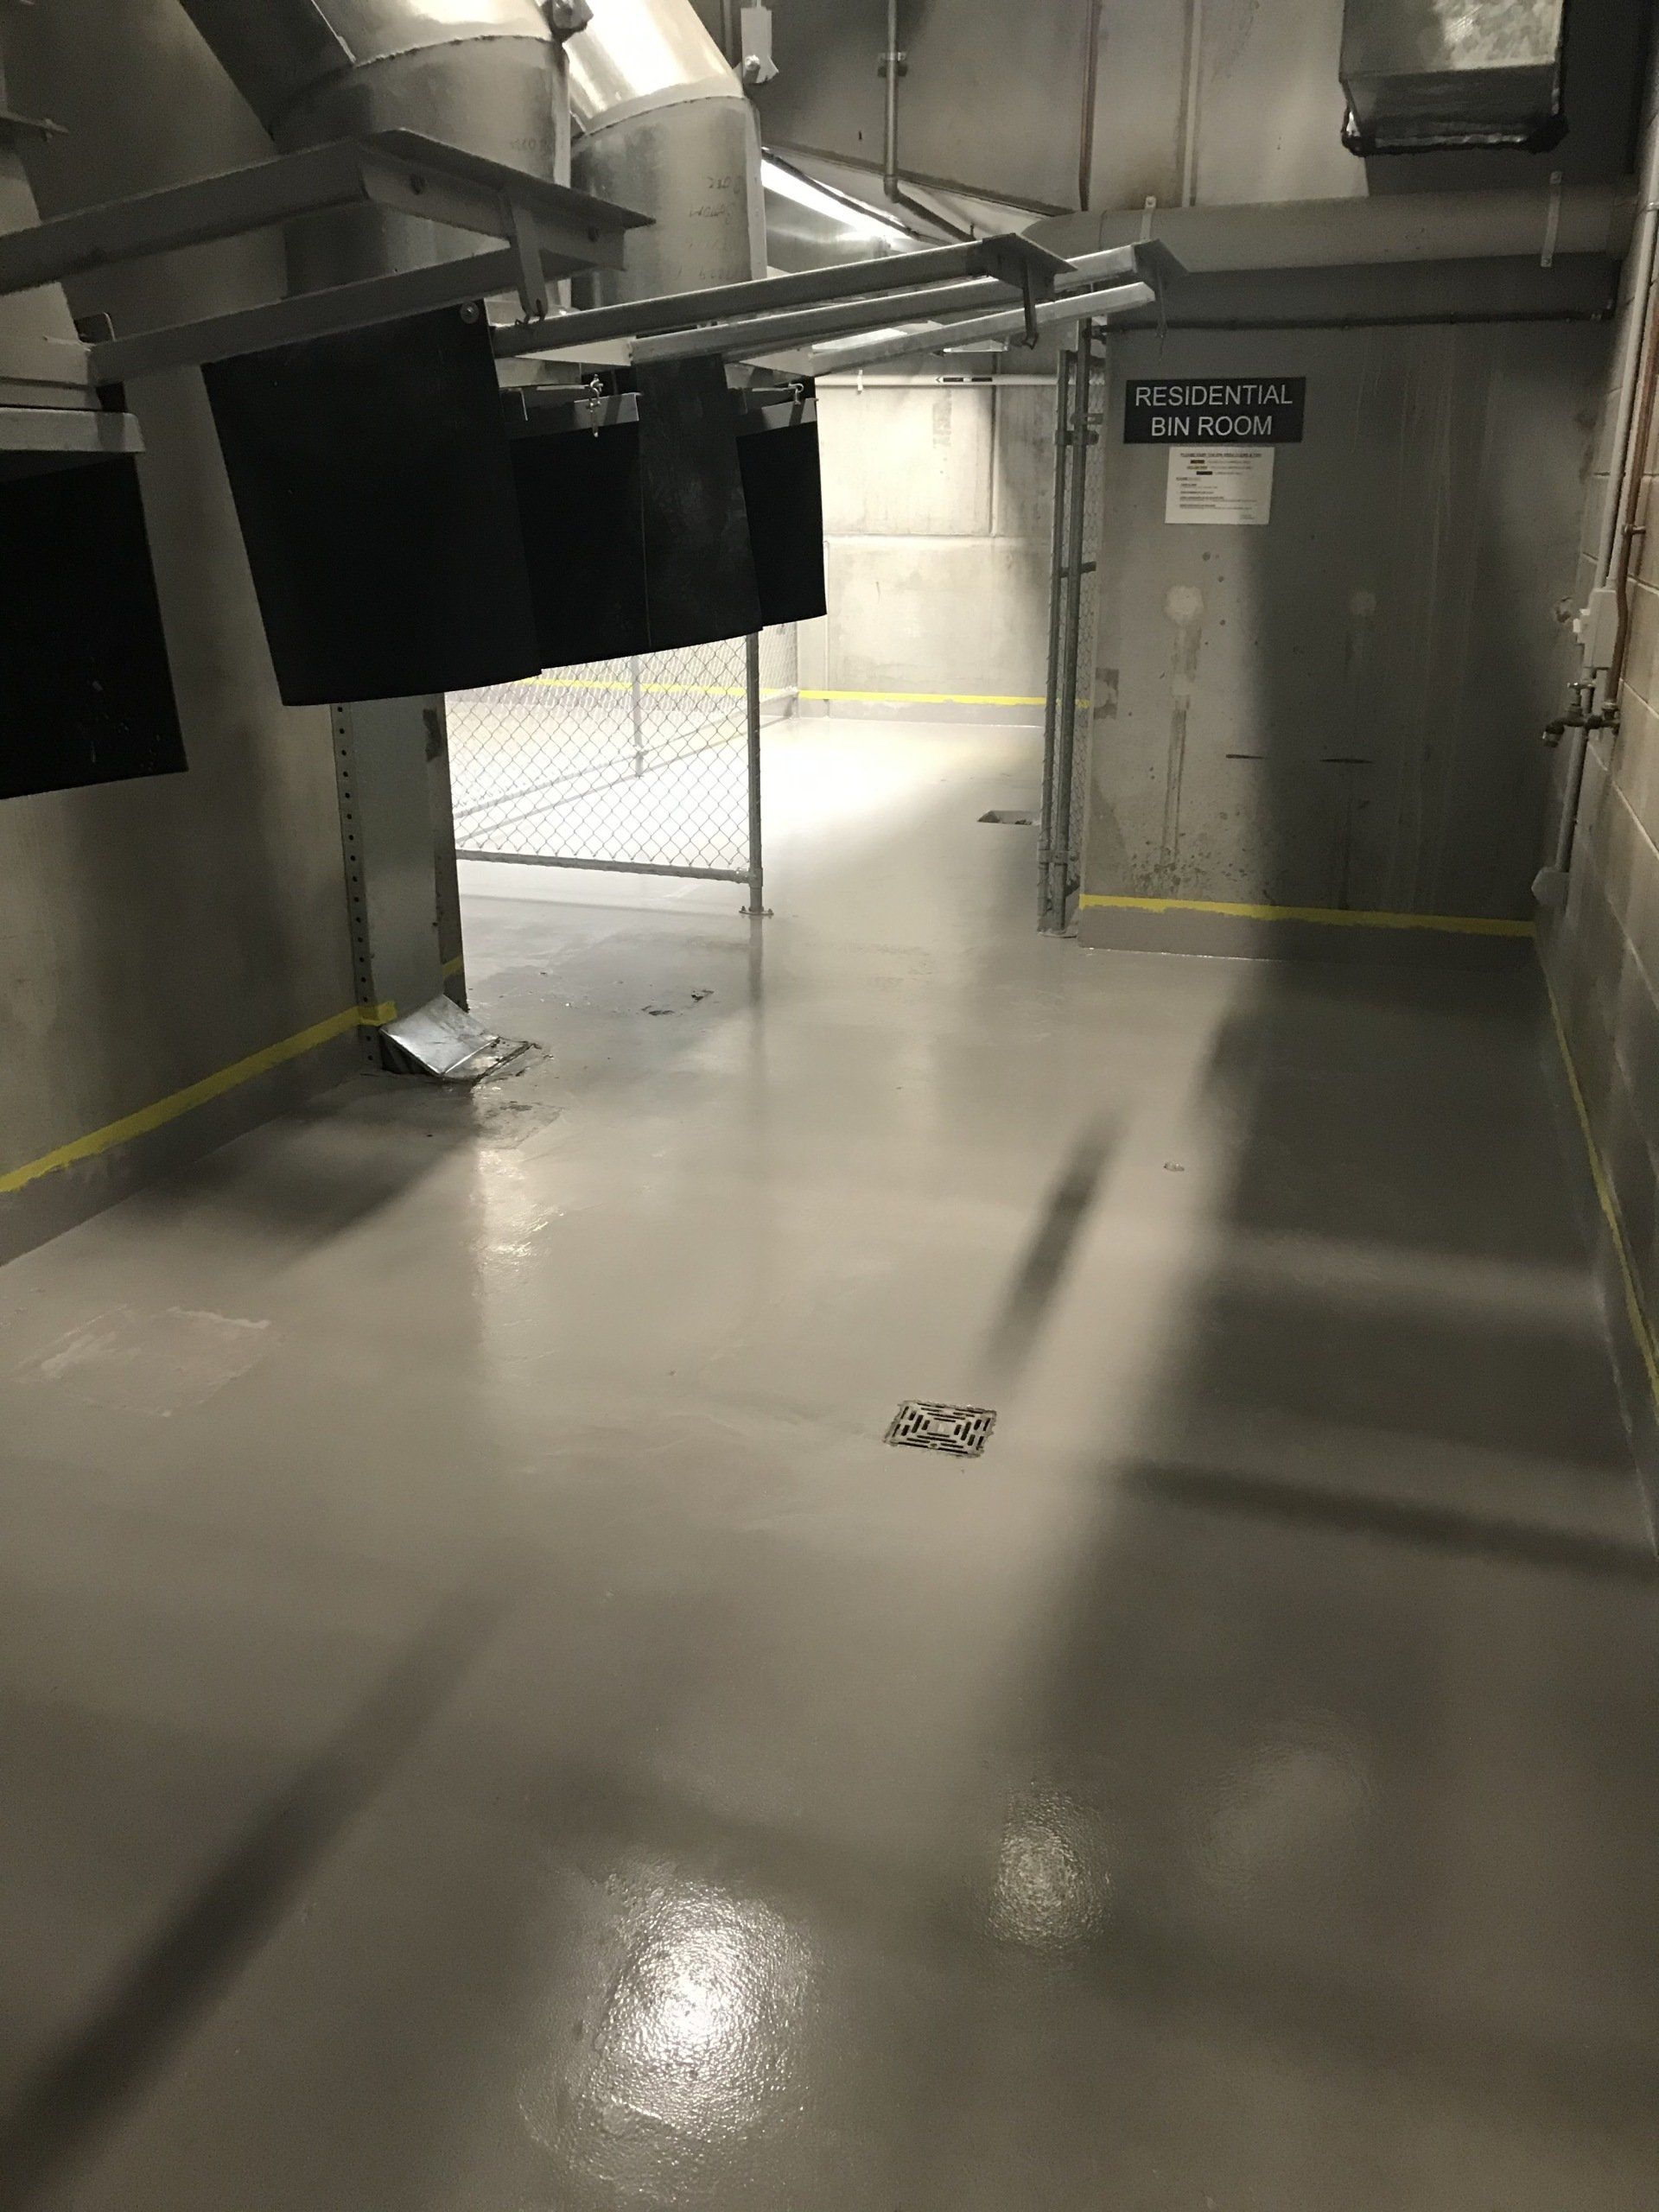 Epoxy flooring in a bin room 